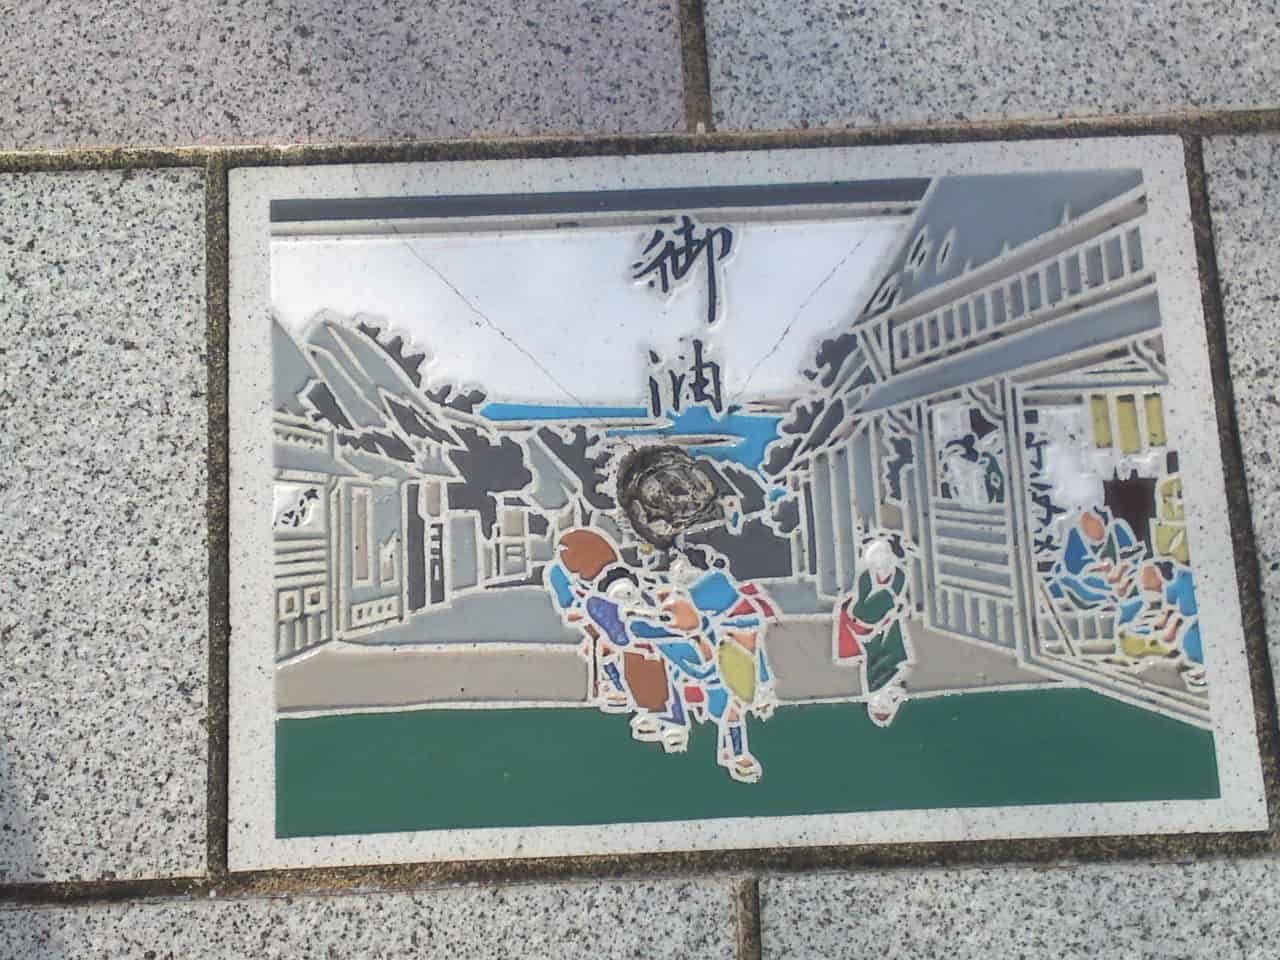 station,ukiyoe,ukiyo,e,tokaido,Tōkaidō,Utagawa,Hiroshige,Shizuoka,woodblock,painting